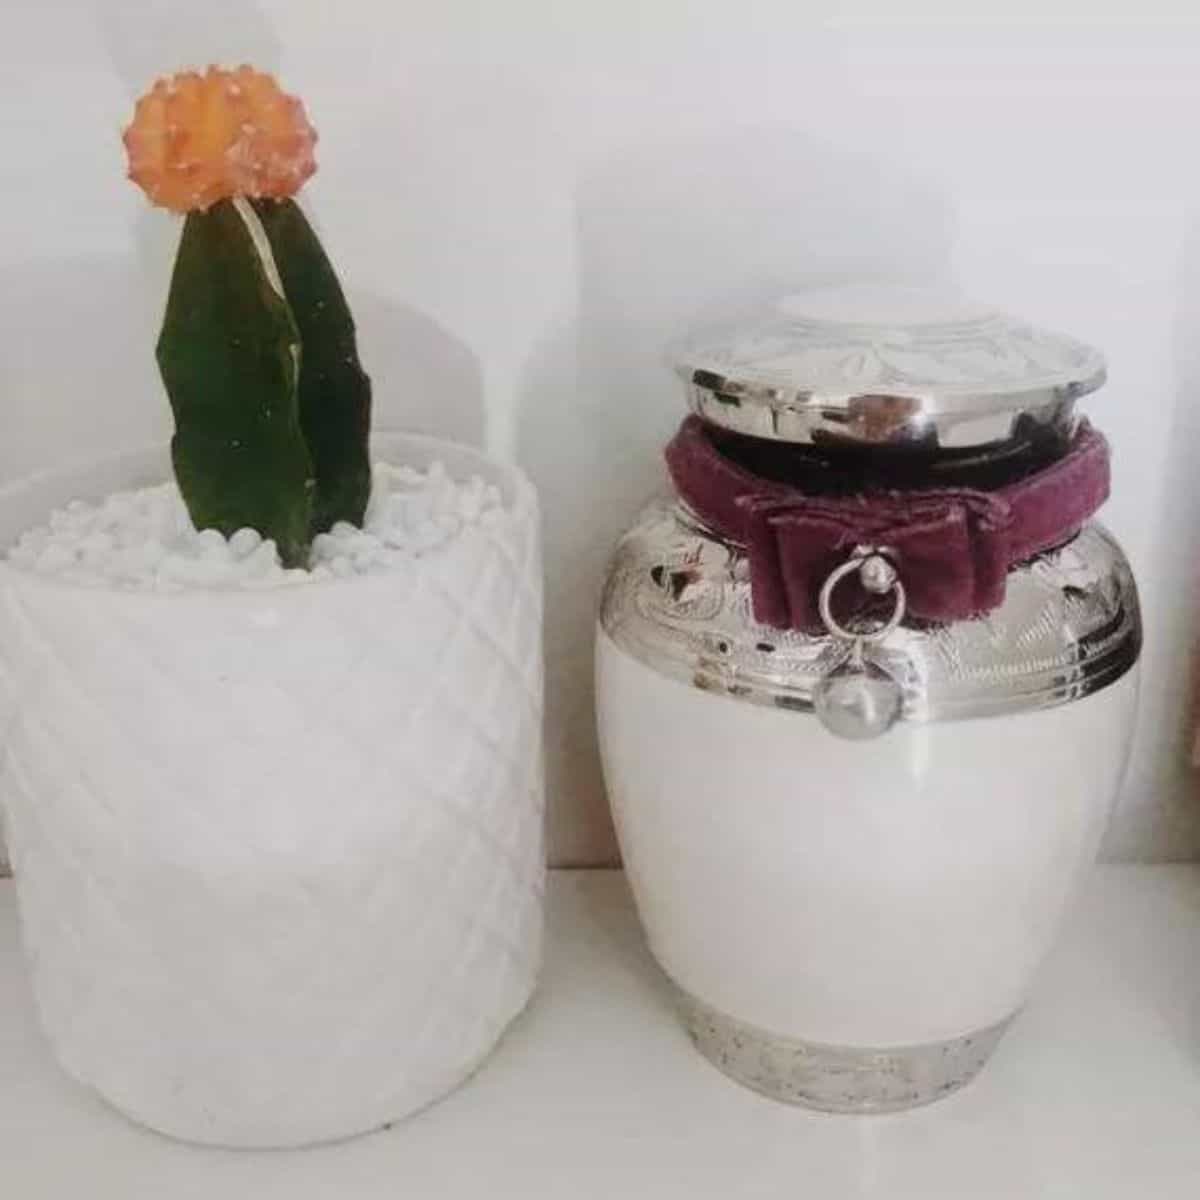 Jar and cactus